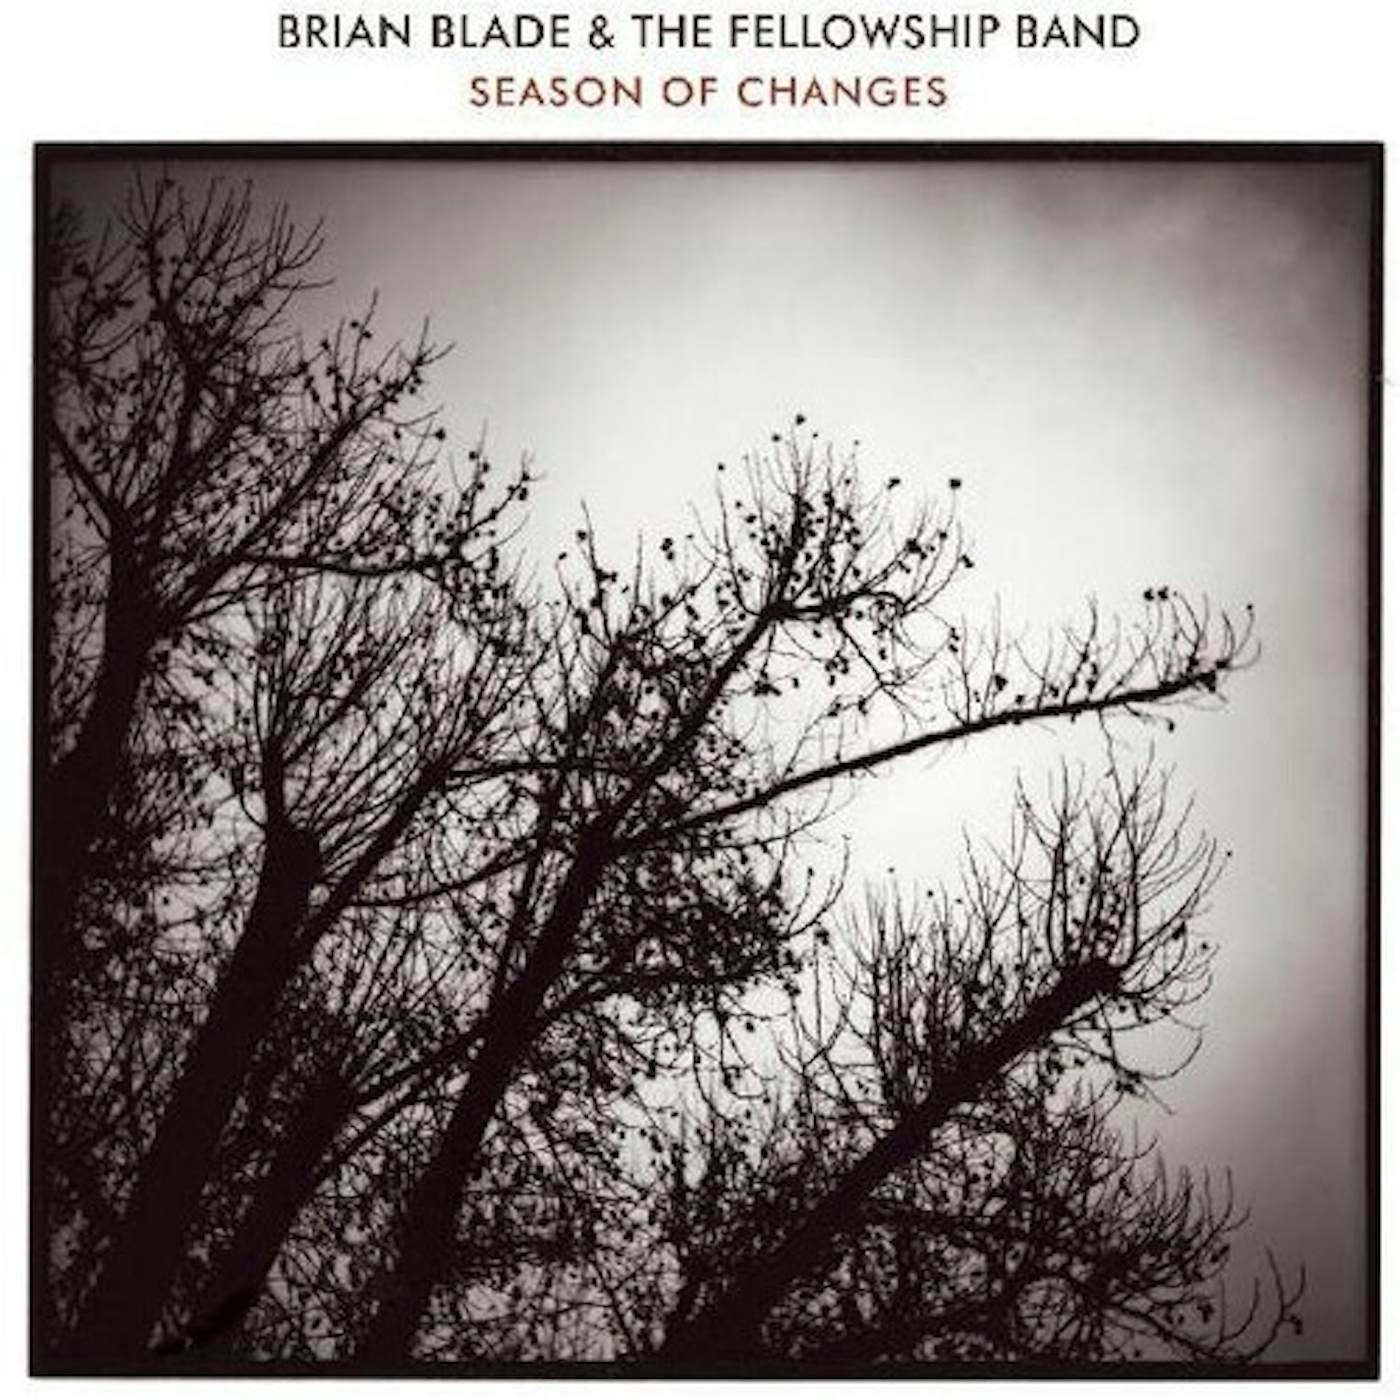 Brian Blade & The Fellowship Band SEASON OF CHANGES CD